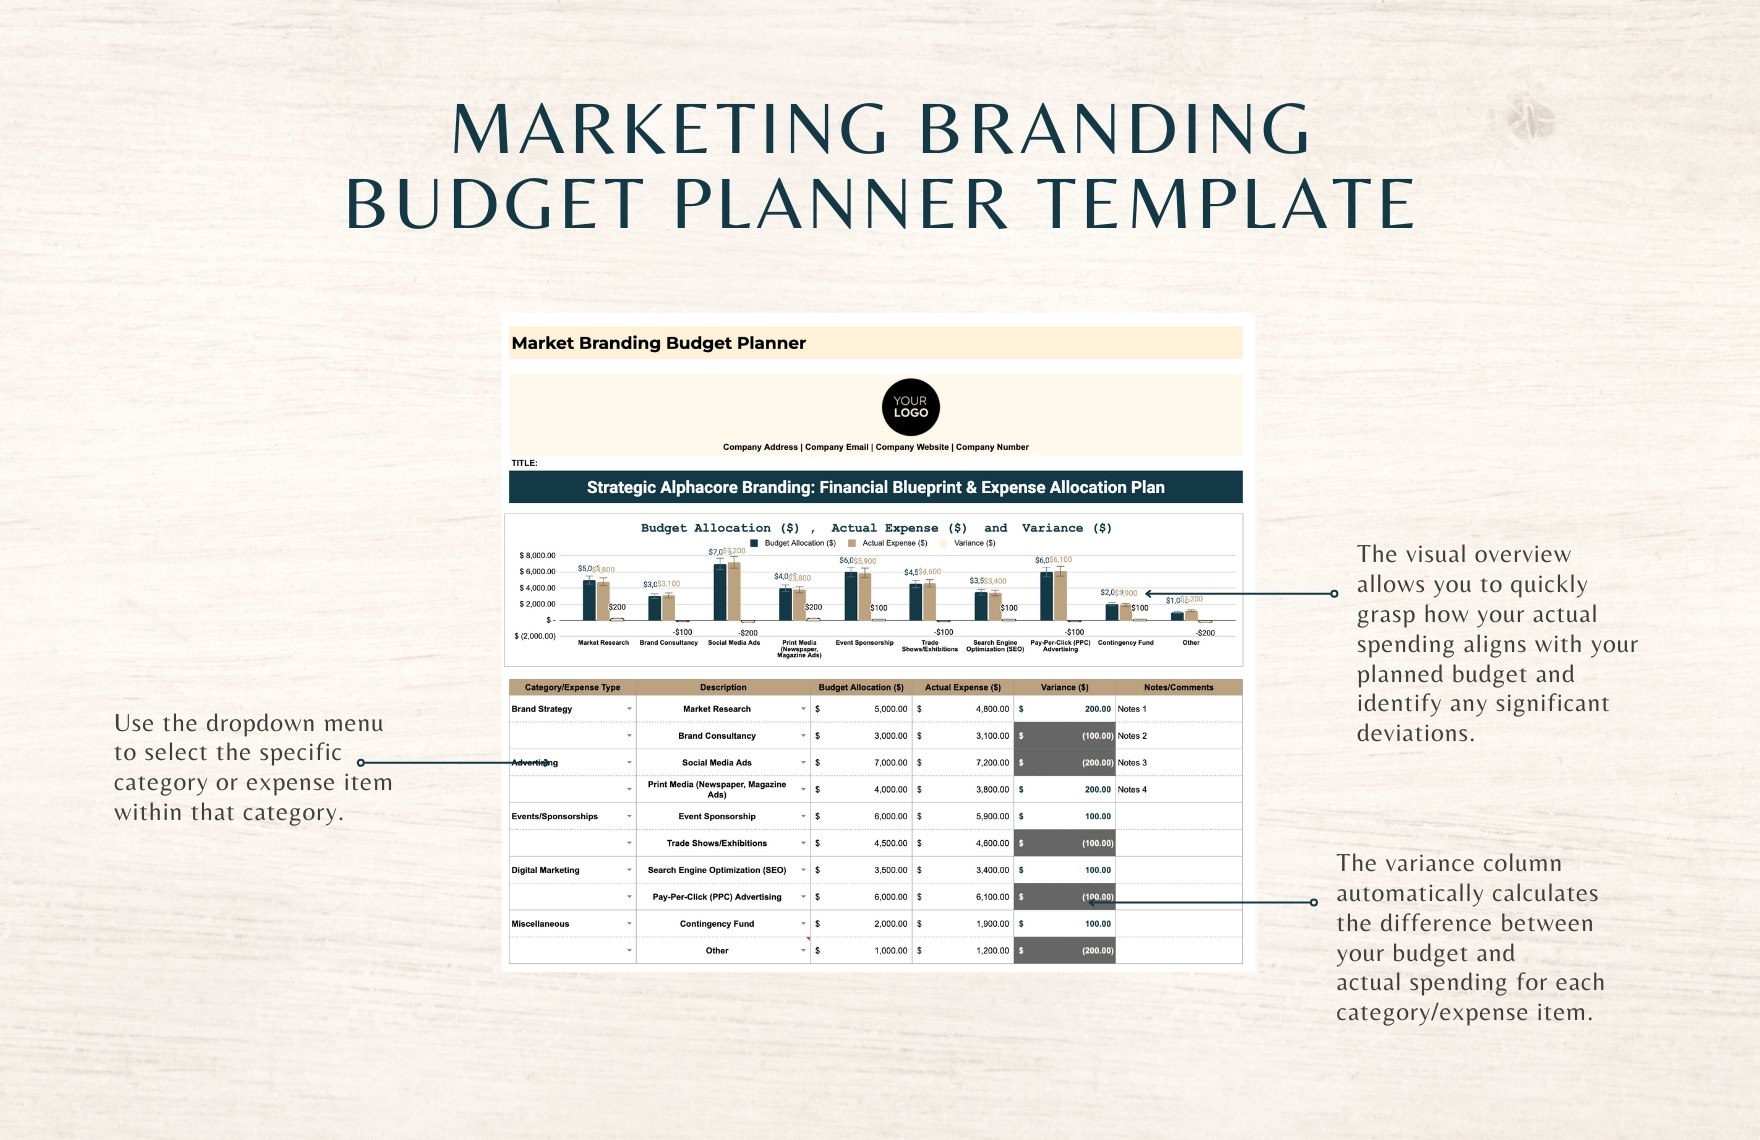 Marketing Branding Budget Planner TemplateMarketing Branding Budget Planner Template